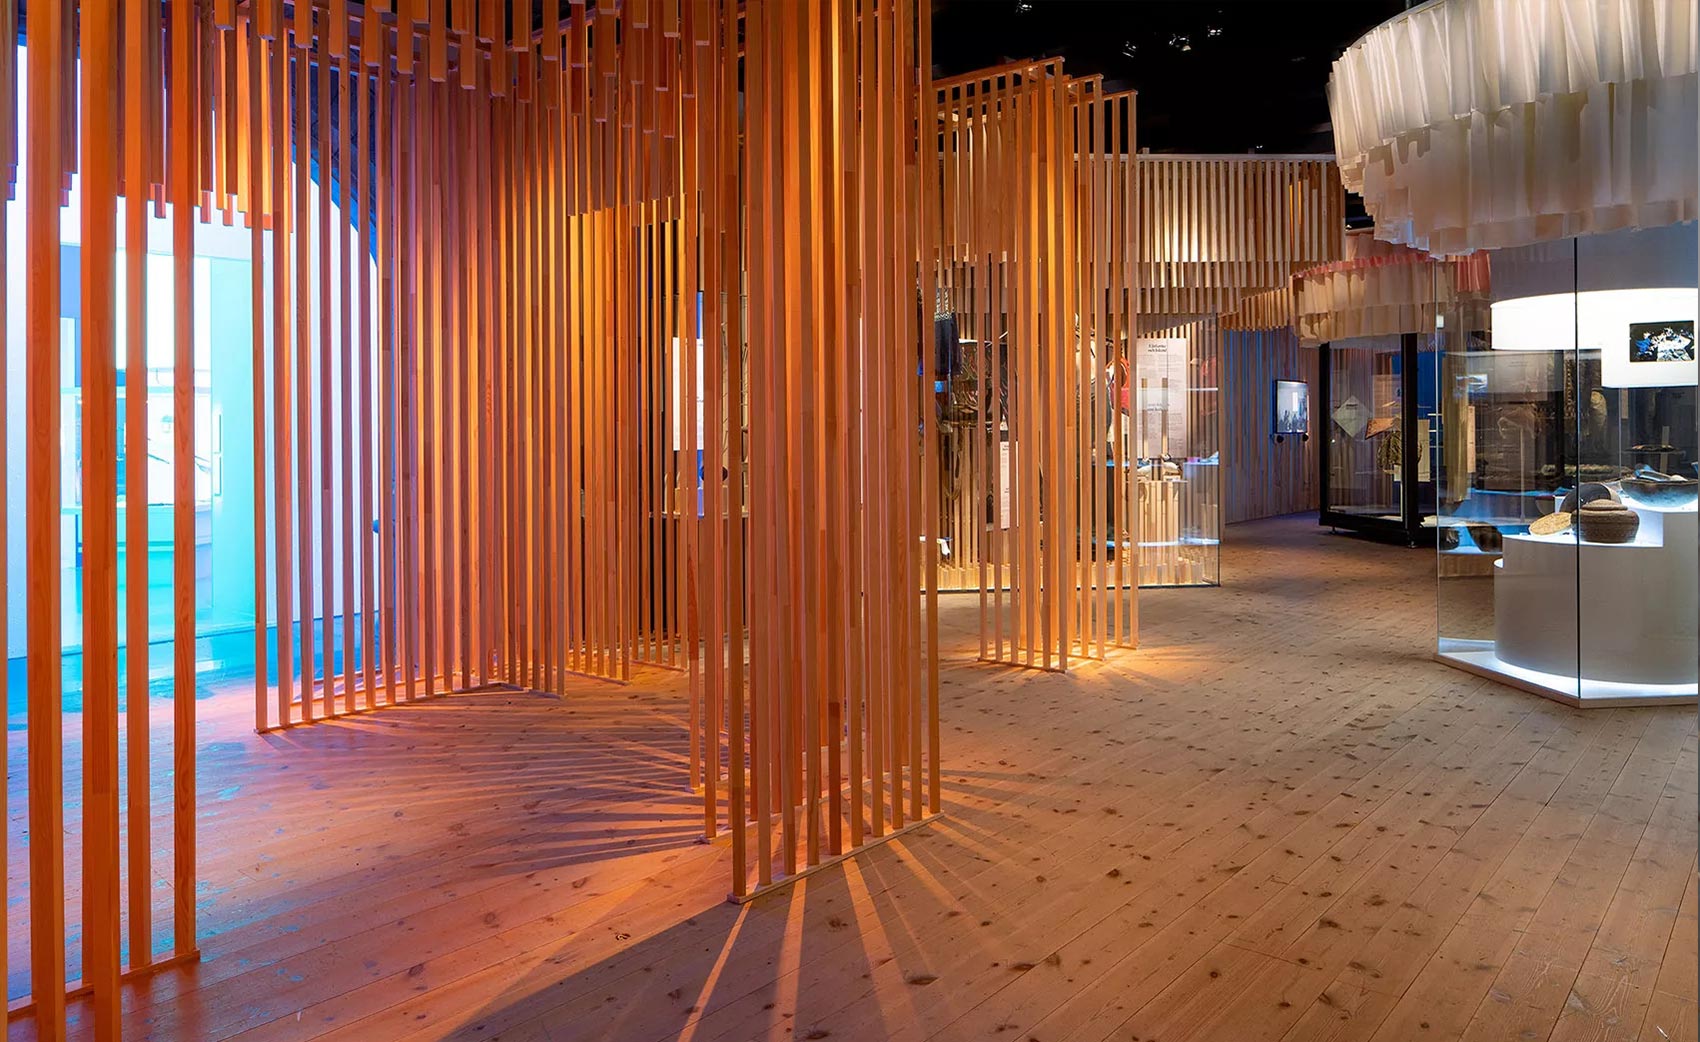 The corridor design of the Nordic Museum exhibition hall